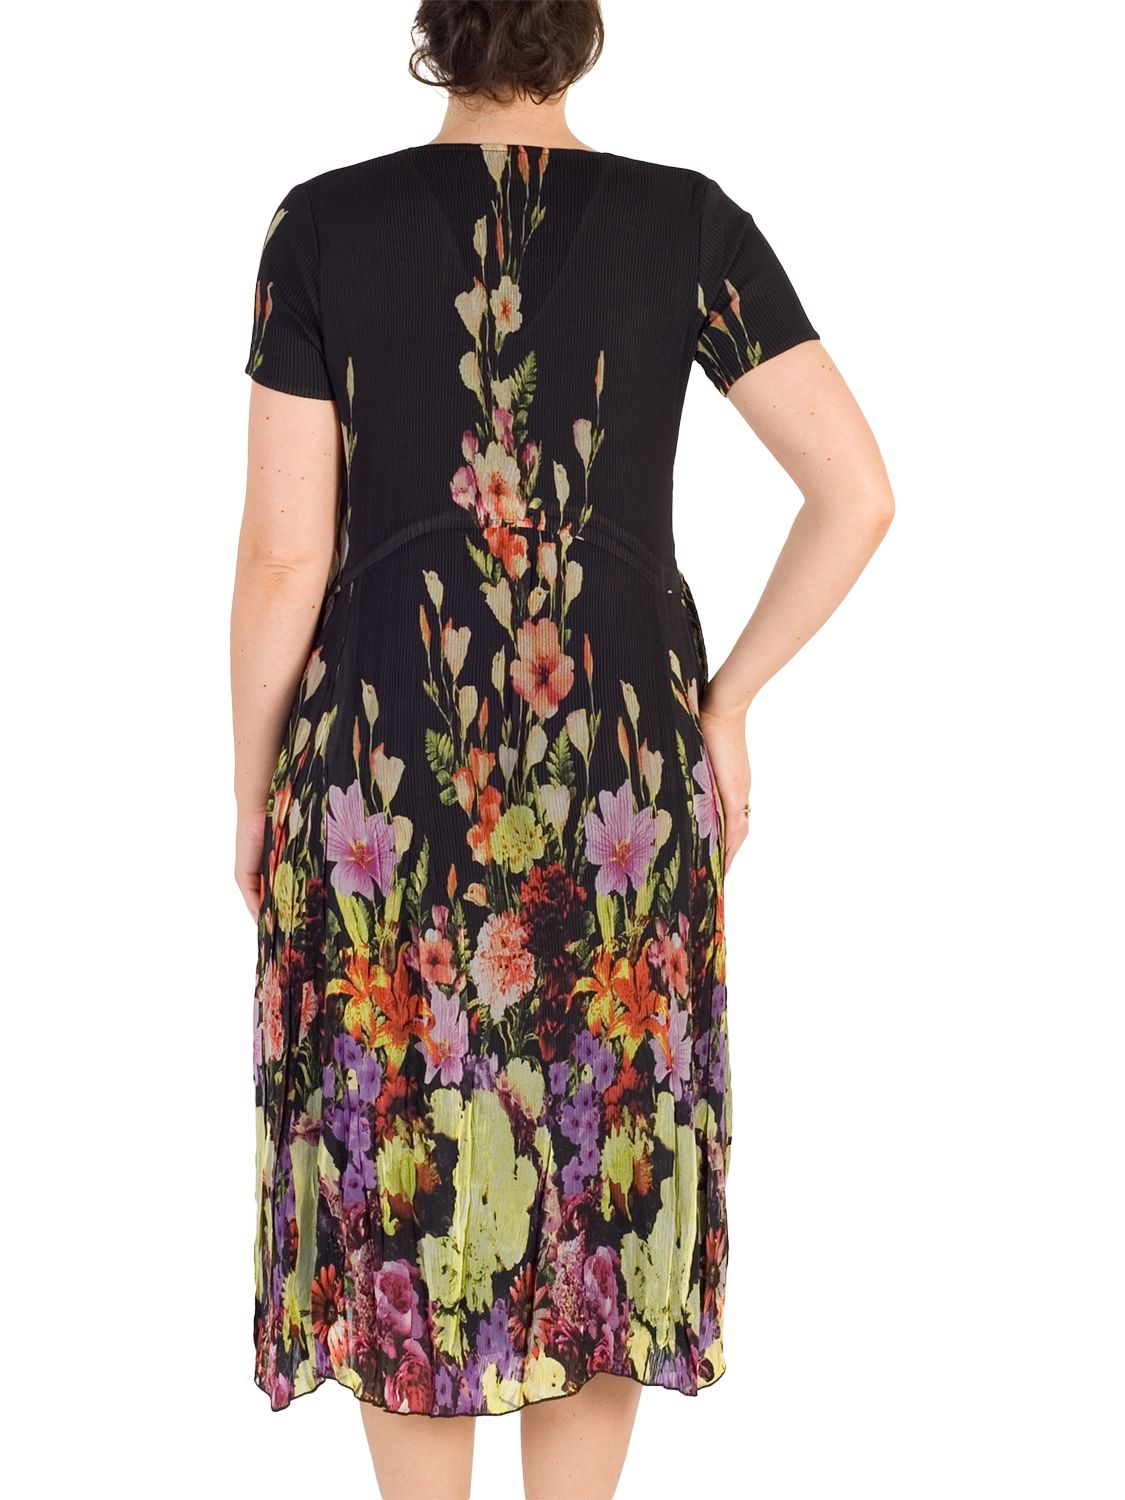 Chesca Floral Border Dress, Black/Multi at John Lewis & Partners